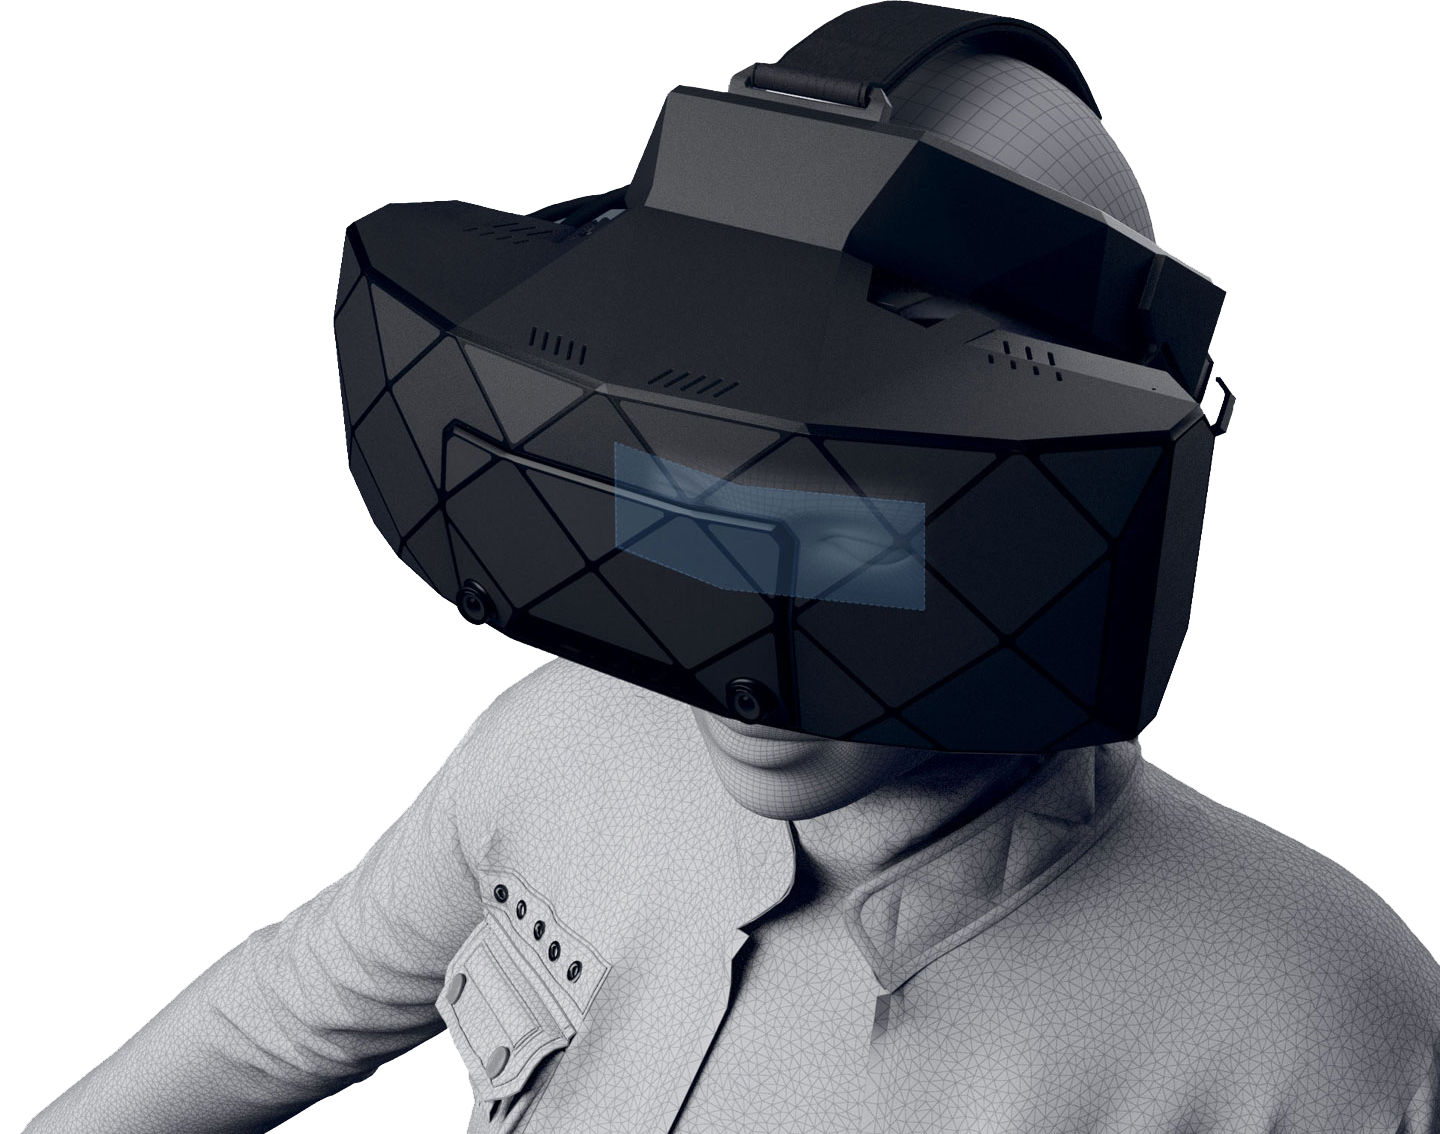 XTAL 3 VR – Virtual Reality Headset - Vrgineers.com